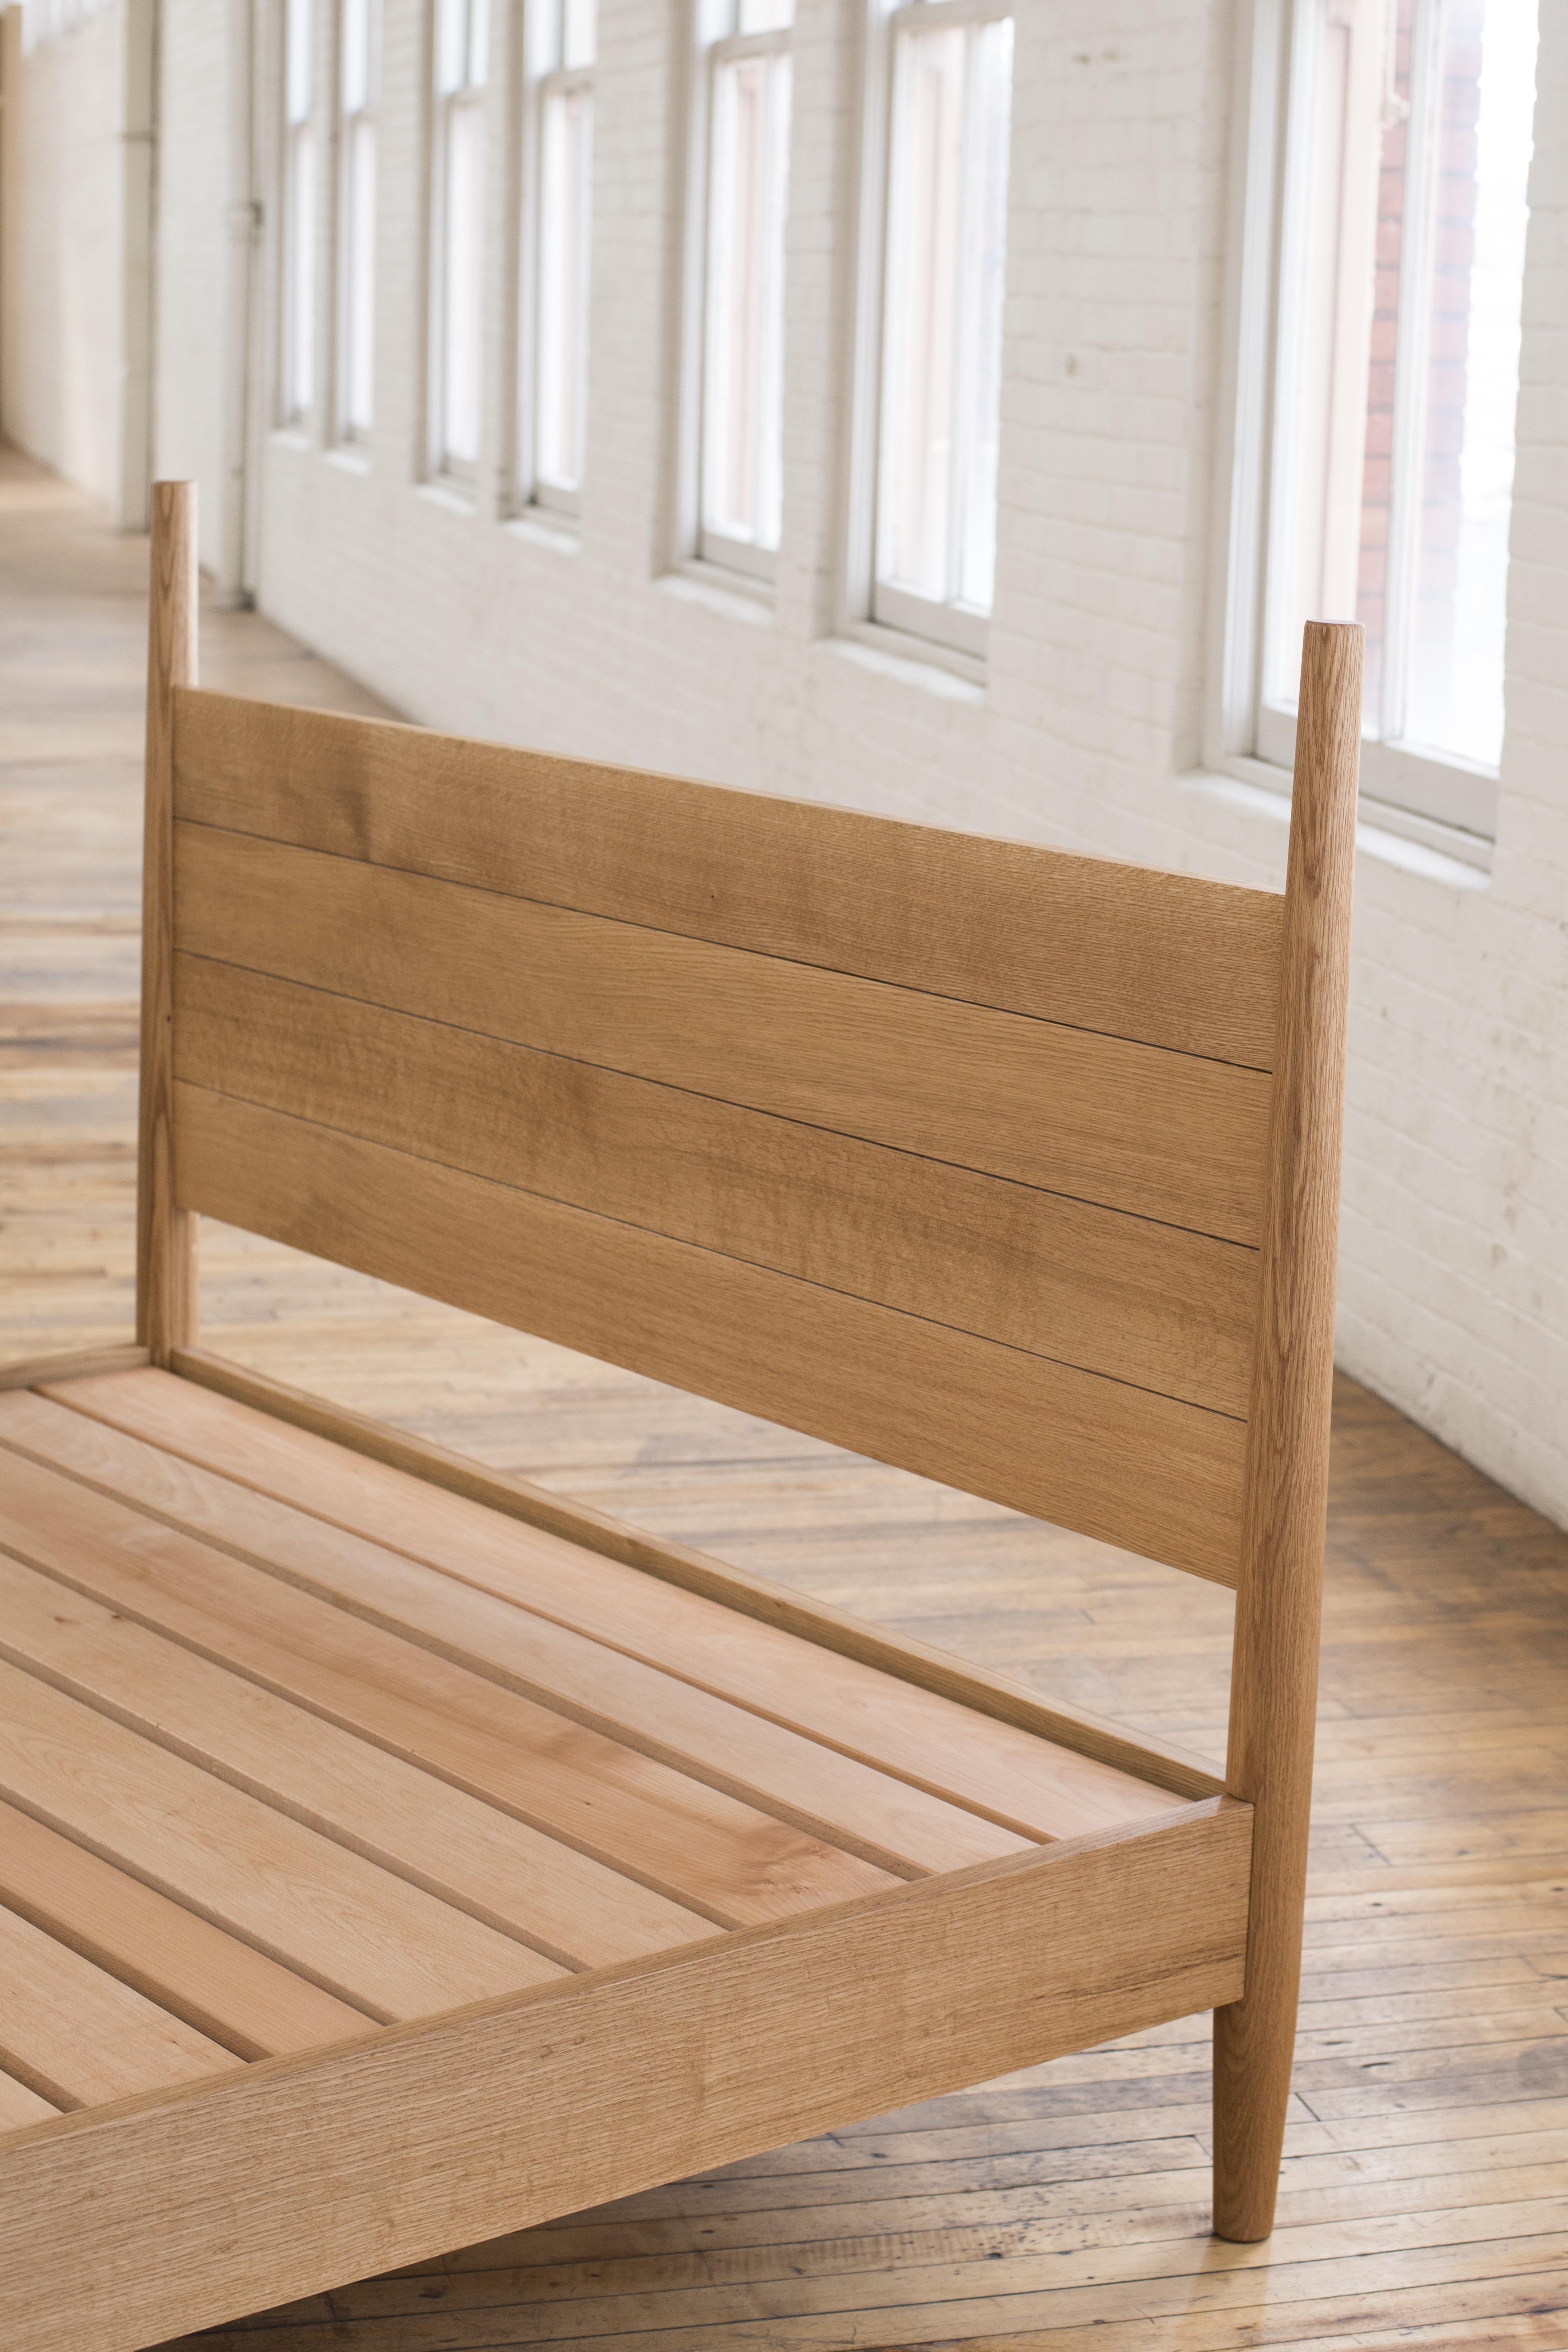 wooden bed frame for sale